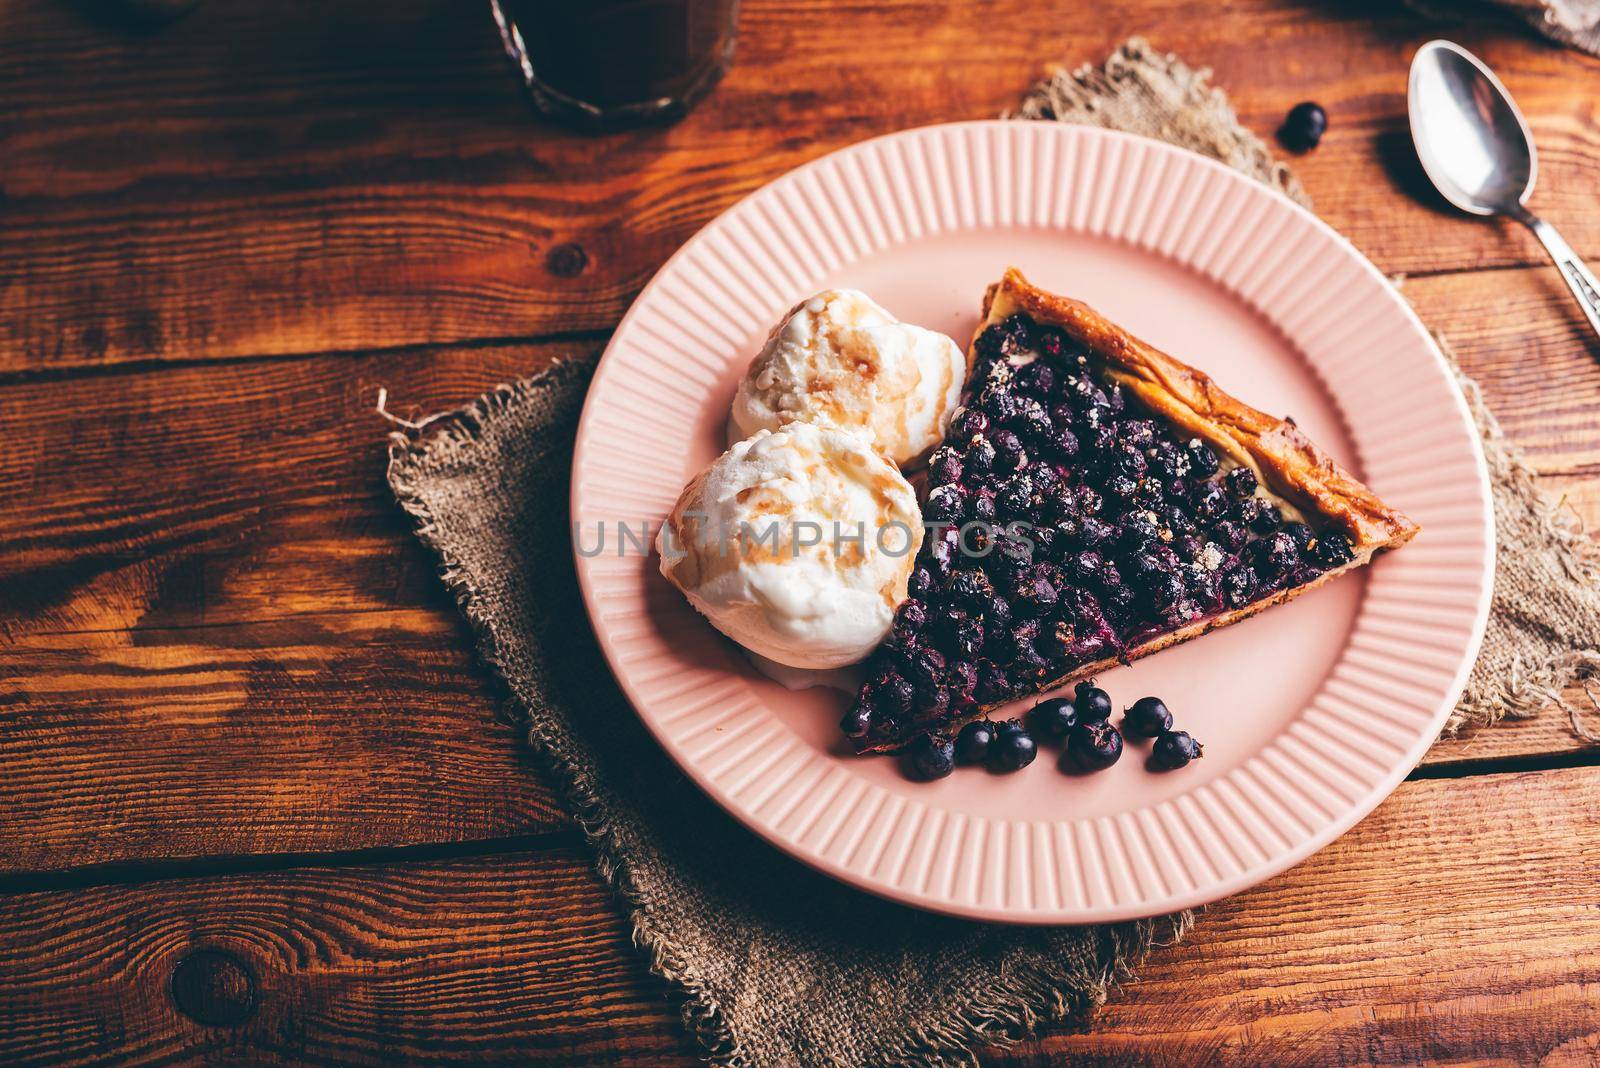 Slice of Serviceberry Pie and Two Scoops Of Vanilla Ice Cream by Seva_blsv